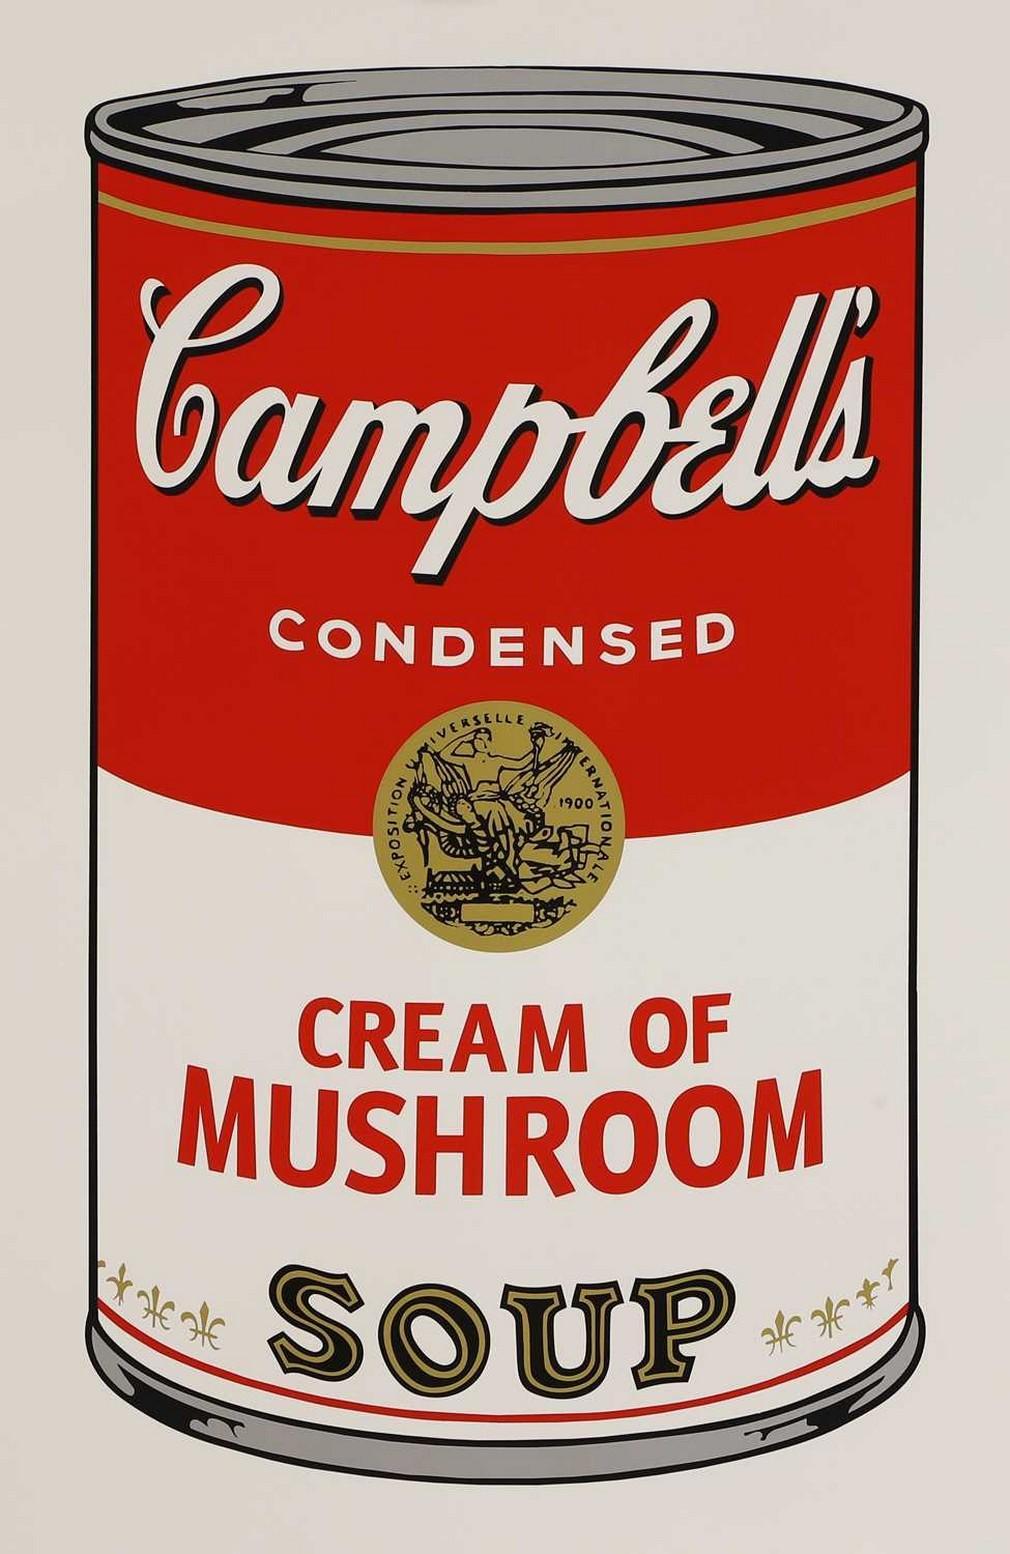 (after) Andy Warhol Figurative Print - Campbells Soup - Cream of Mushroom